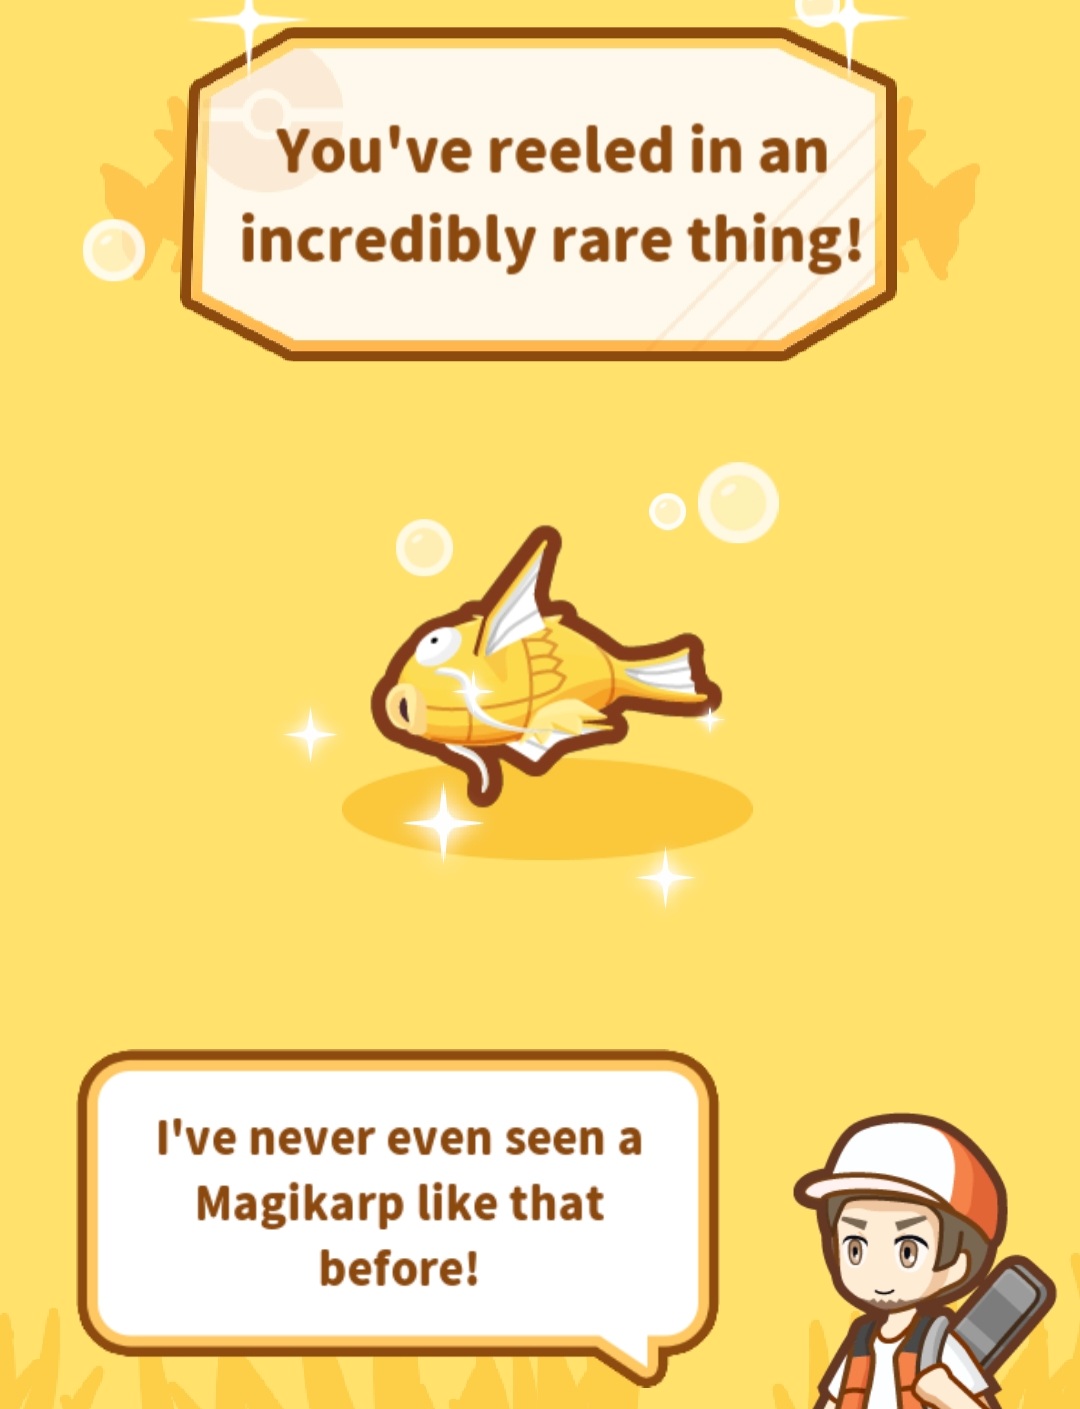 screenshot from mobile game Pokemon Magikarp Jump, showing a yellow shiny magikarp